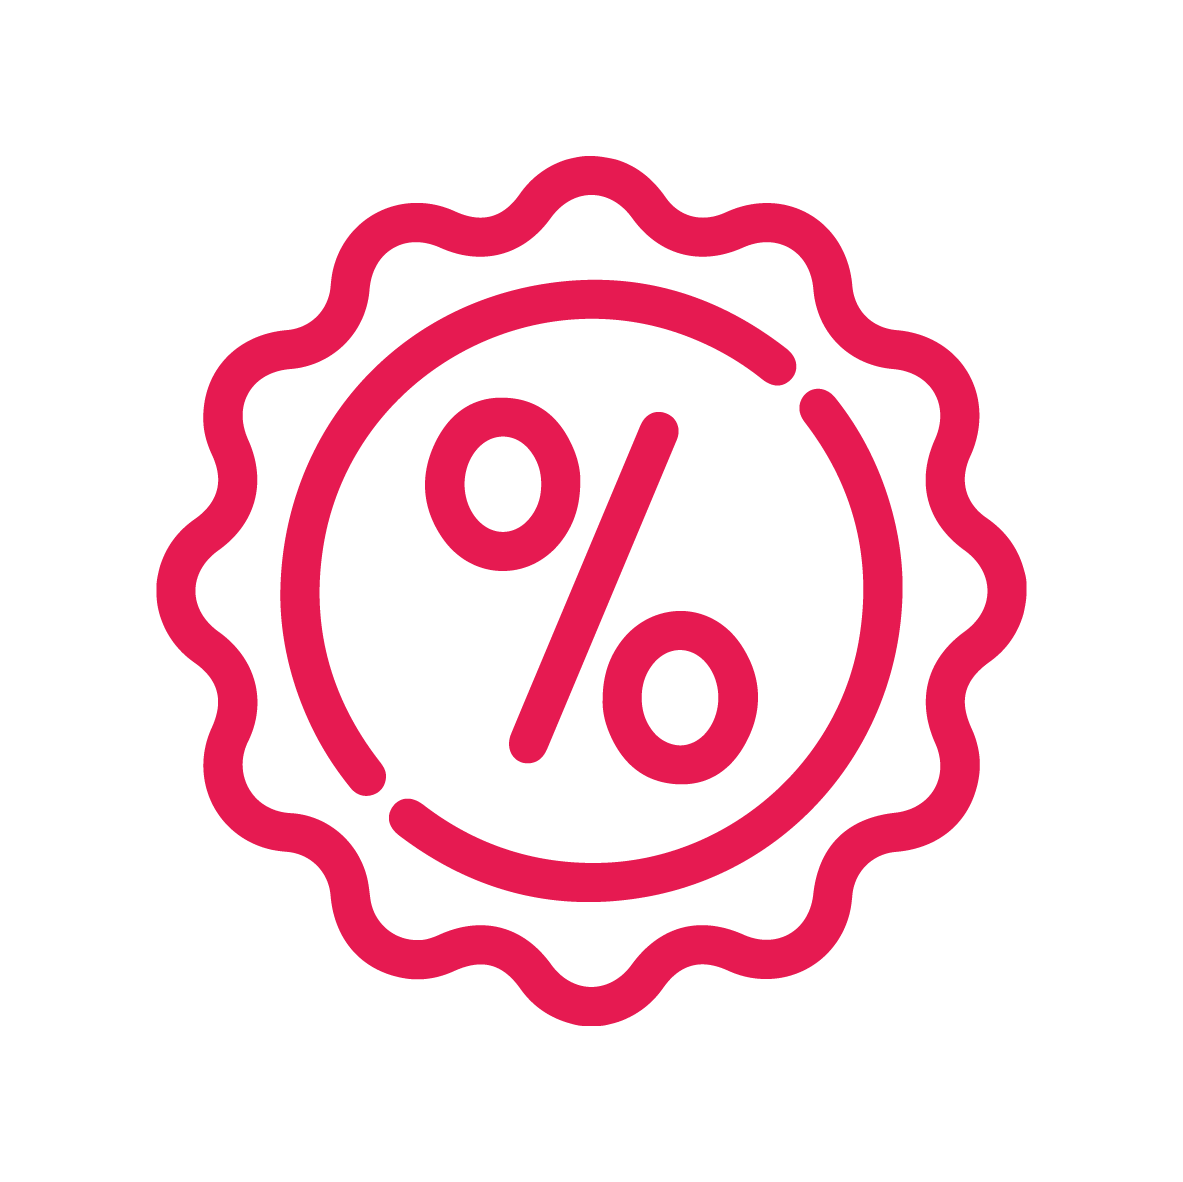 Percent off badge icon